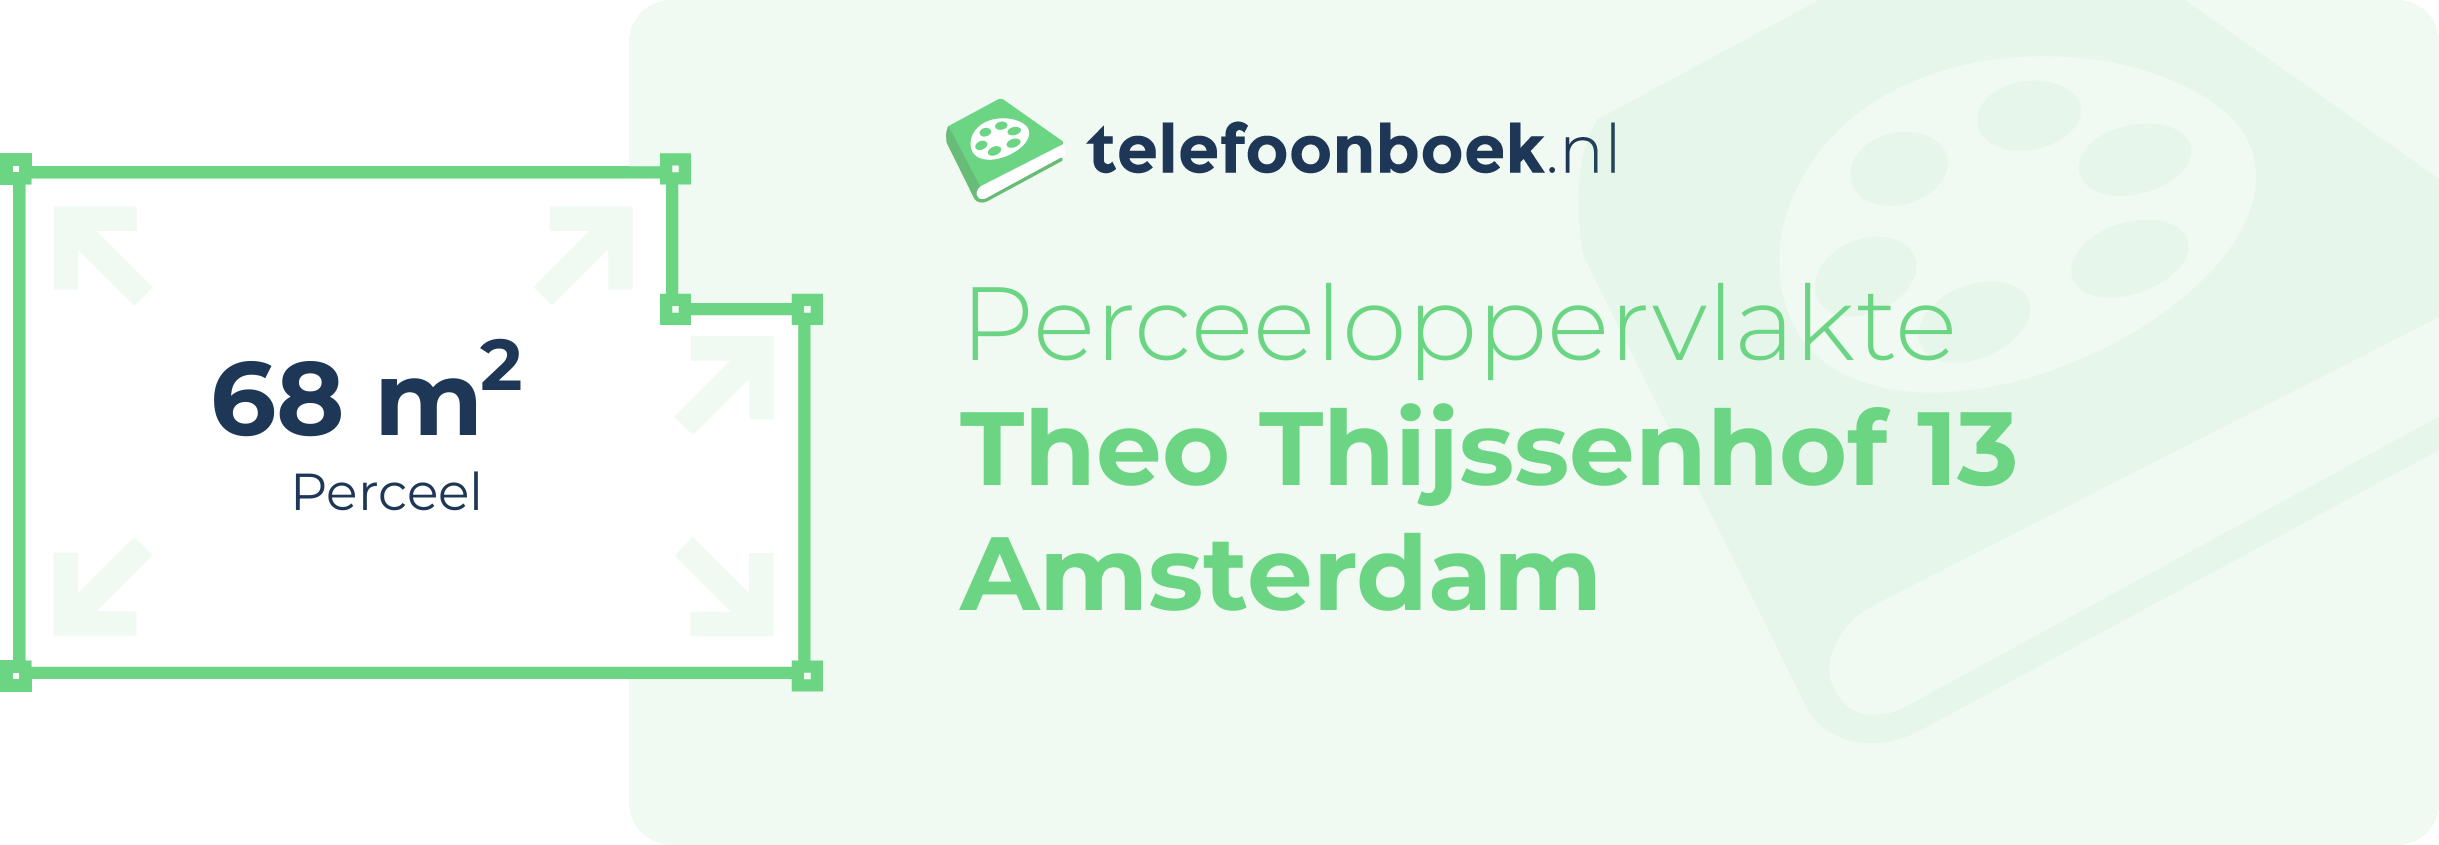 Perceeloppervlakte Theo Thijssenhof 13 Amsterdam